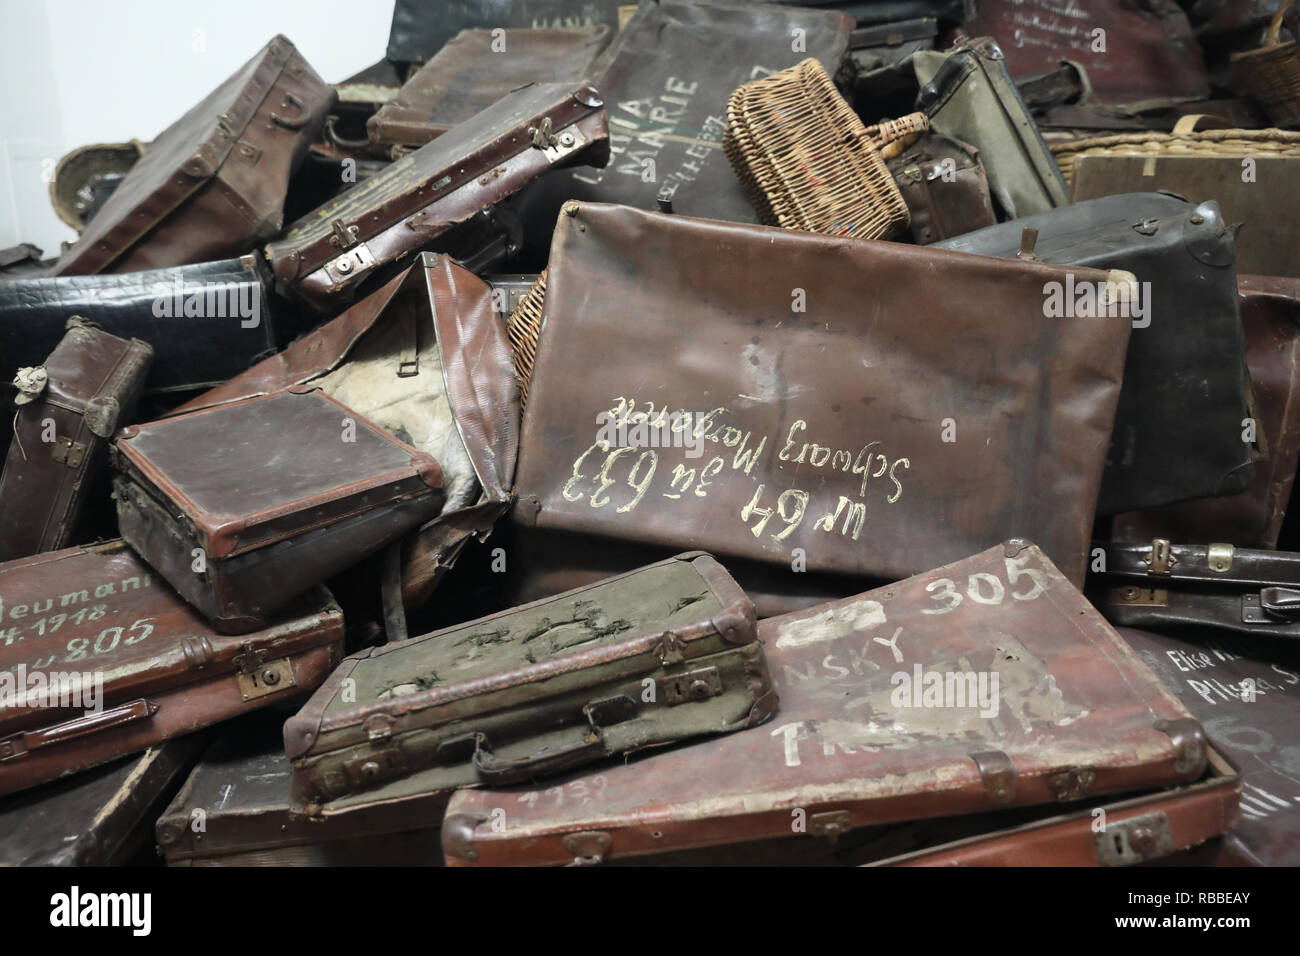 amplifikation Bliv klar Skaldet Suitcases auschwitz victims hi-res stock photography and images - Alamy